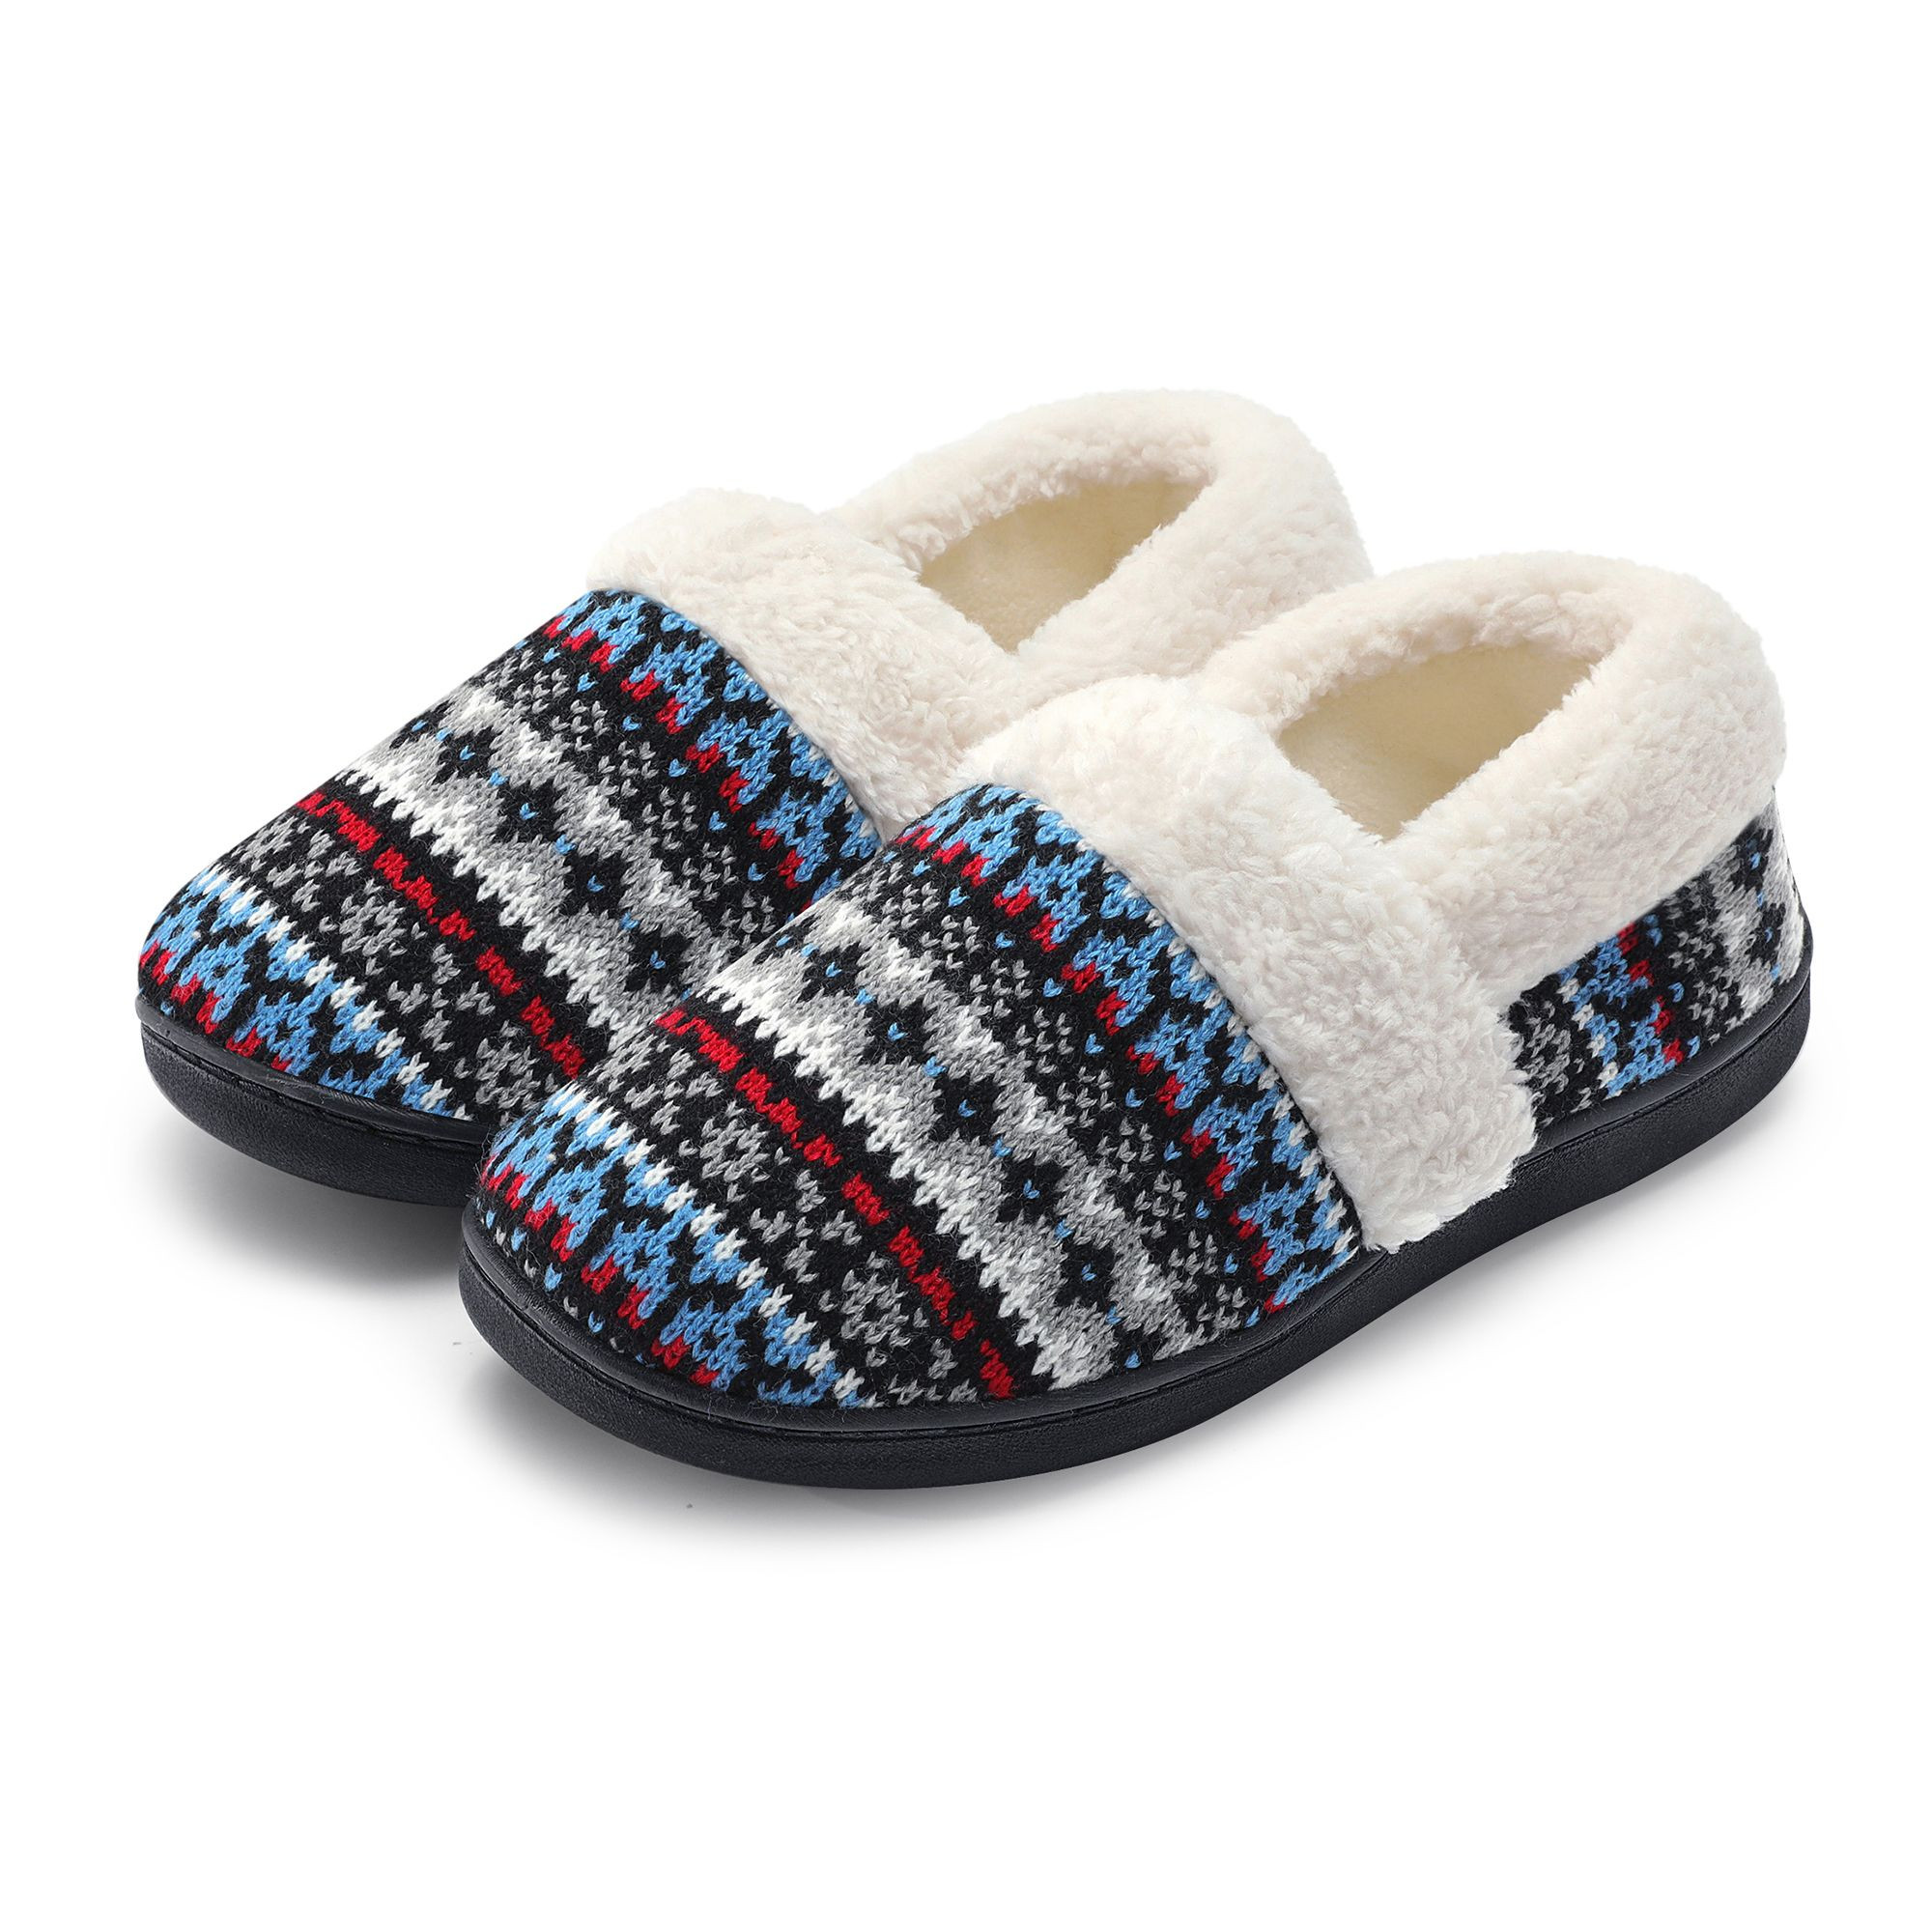 Women's Slip-On Knit Slippers Memory Foam Fuzzy House Slippers Comfy Plush Fleece Lined House Shoes